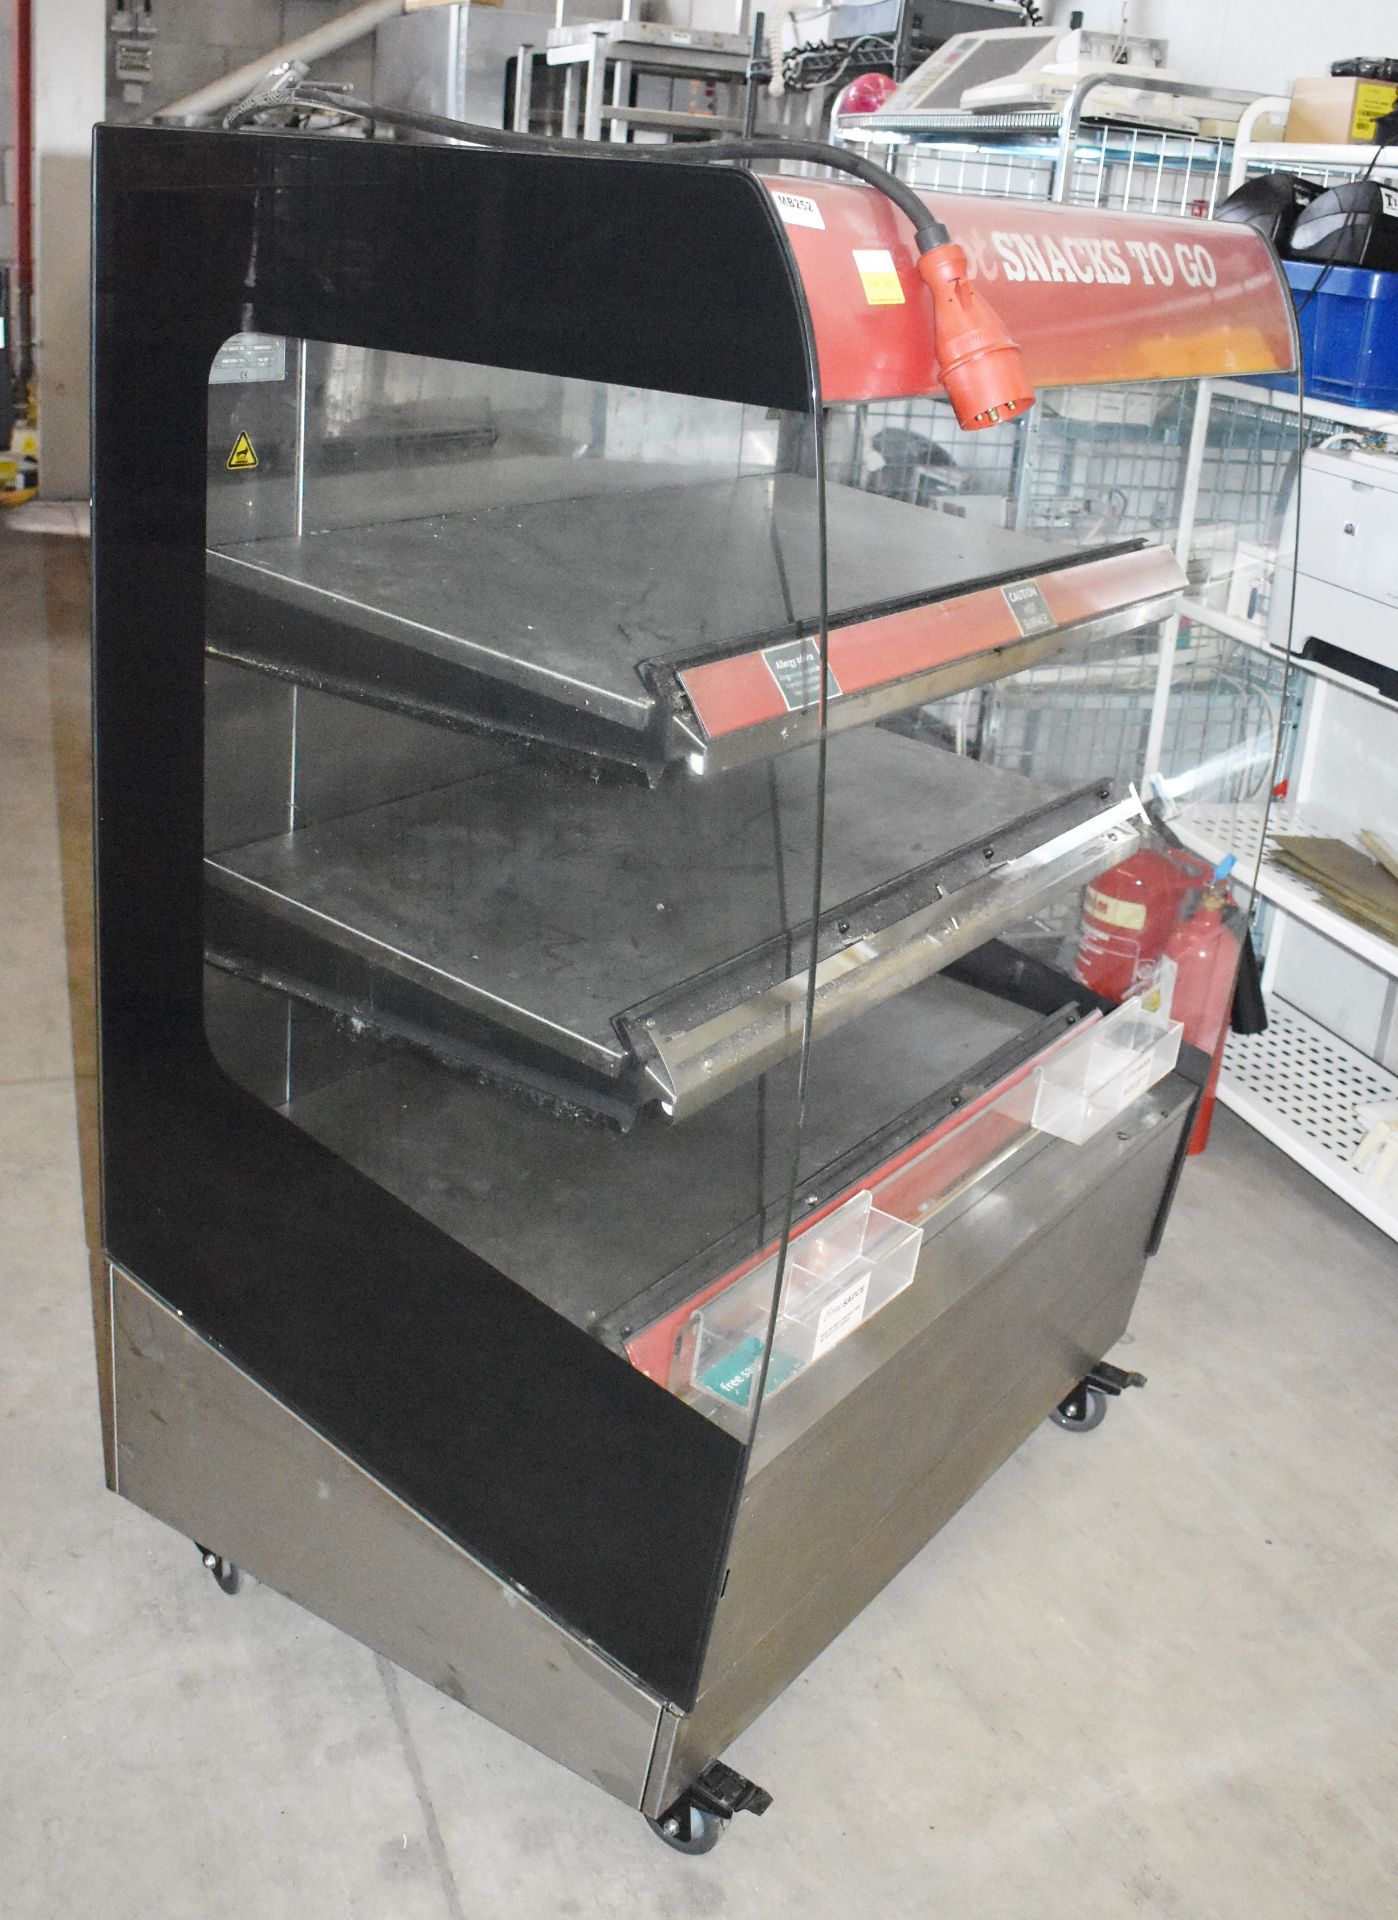 1 x Fri-Jado Three Tier Multi Deck Hot Food Warmer Heated Display Unit - Contemporary Modern - Image 3 of 6